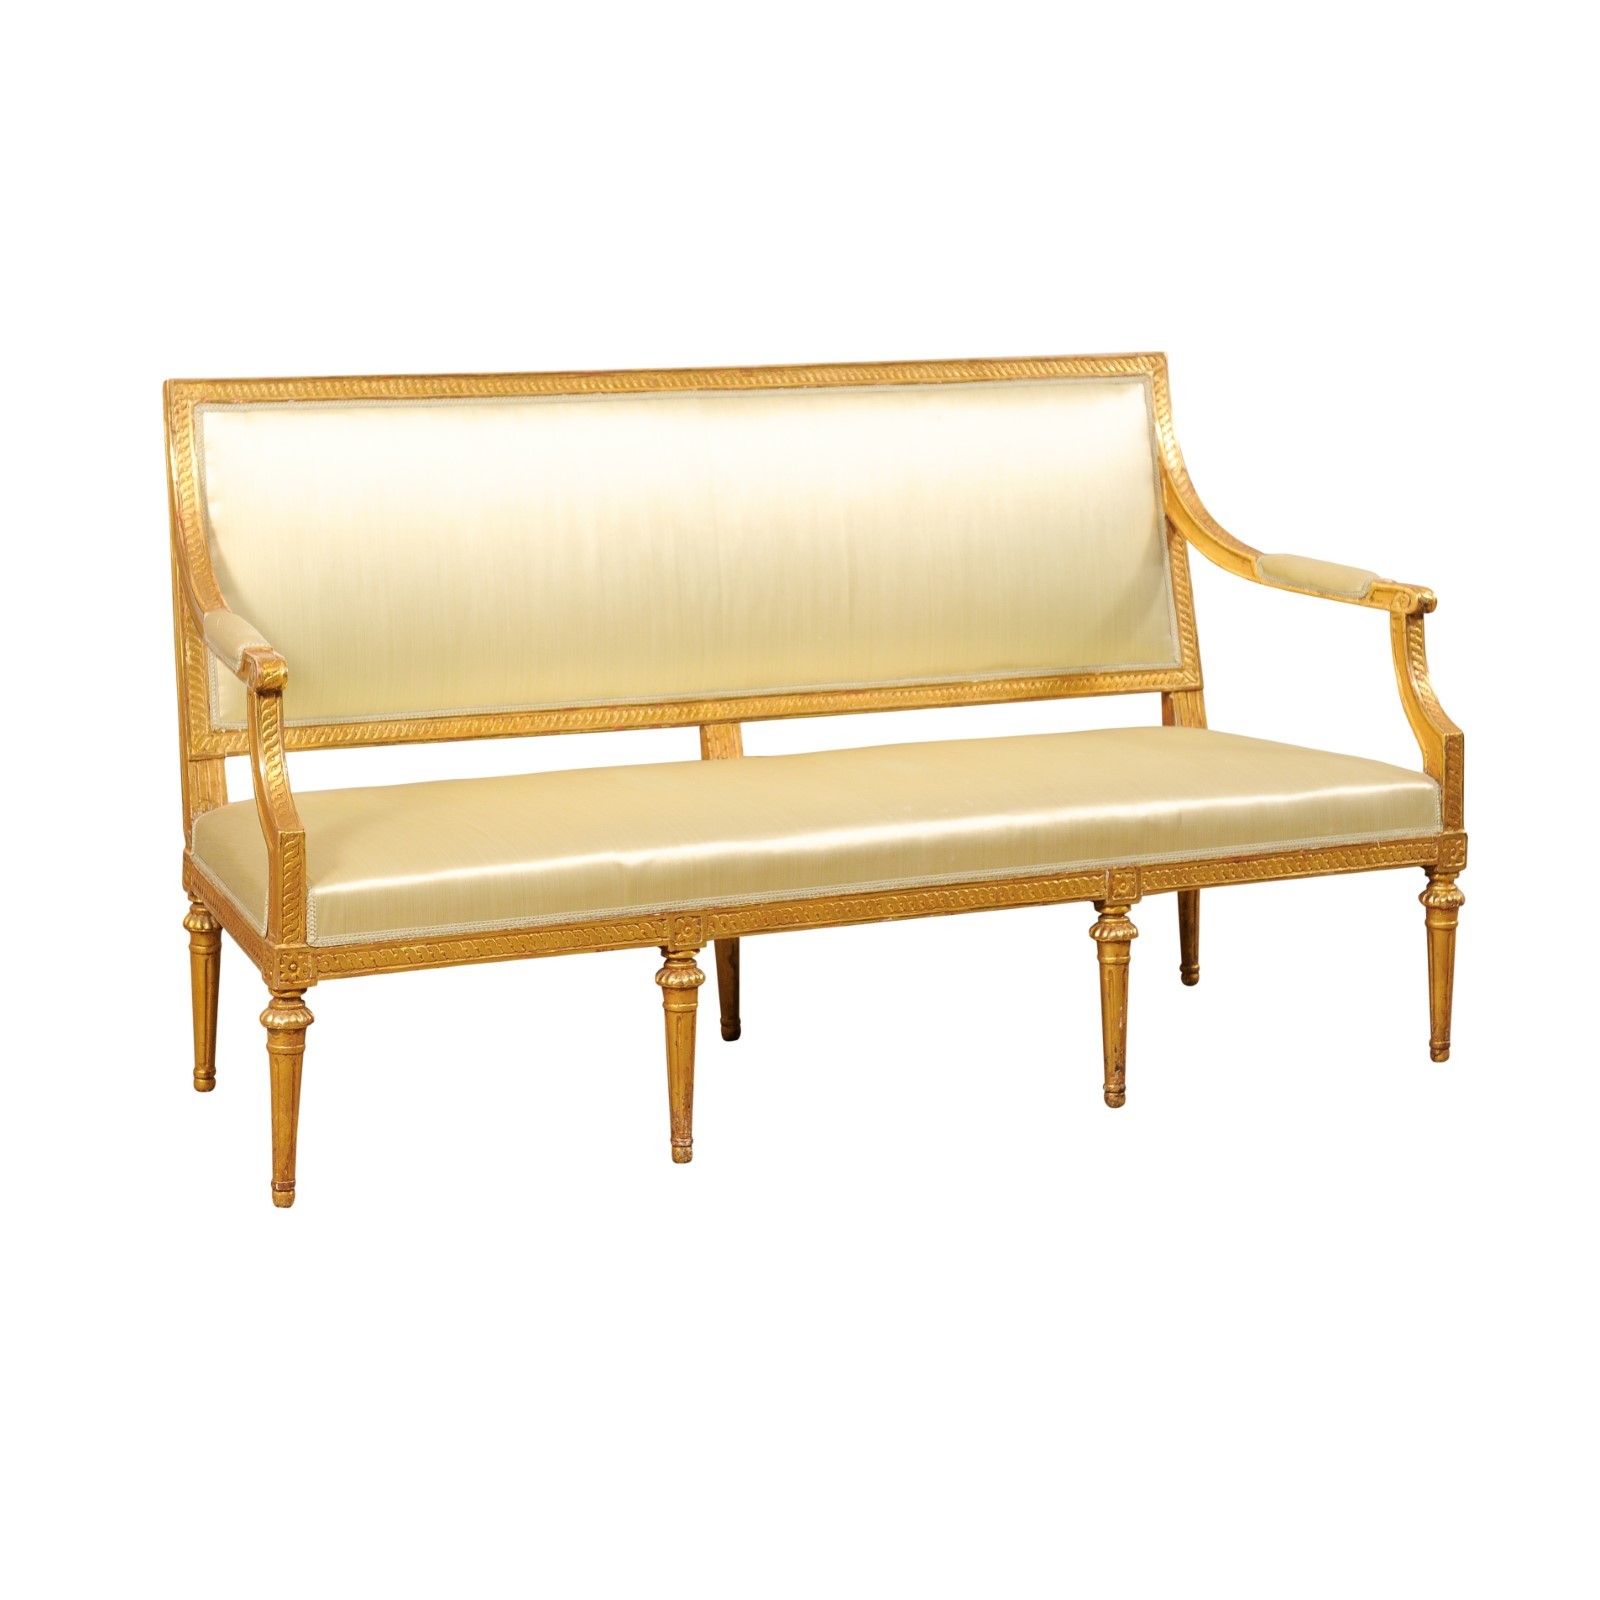 Swedish Neoclassical Sofa Bench, 19th C.